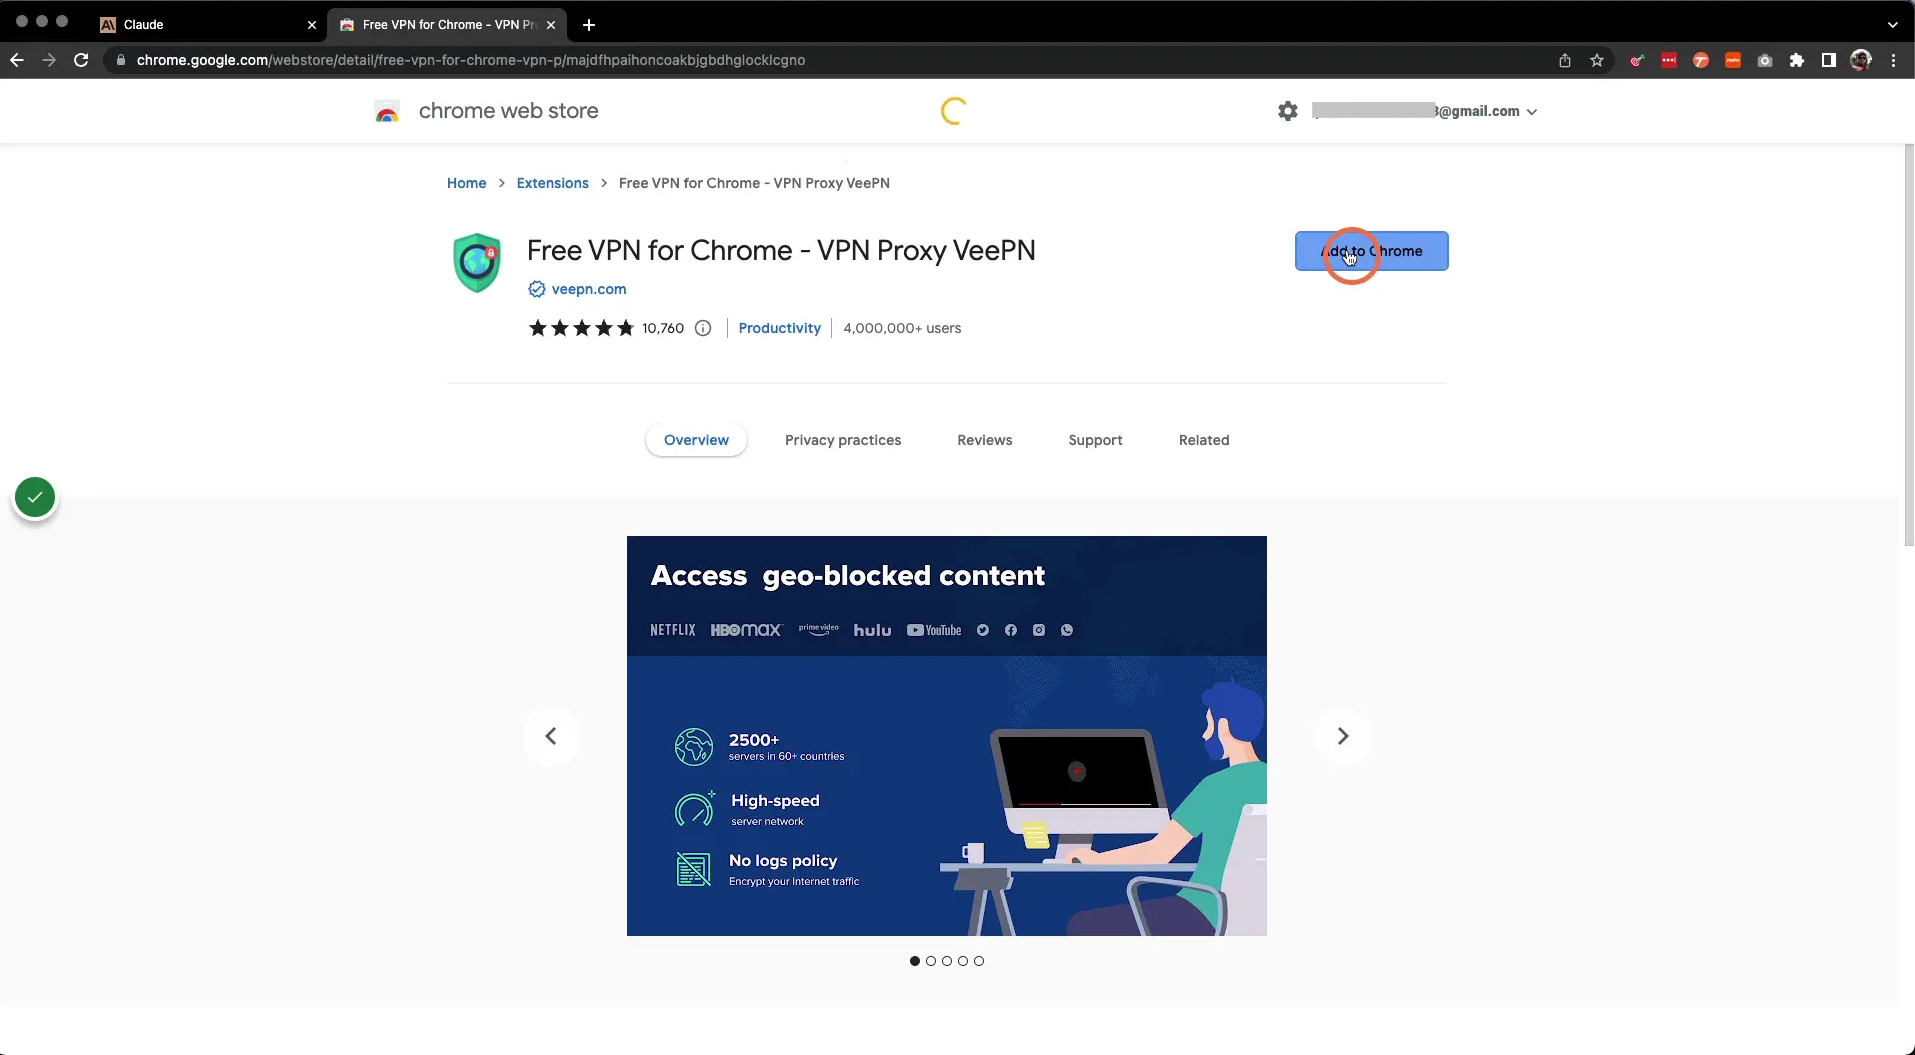 Download VPN for Chrome Extension